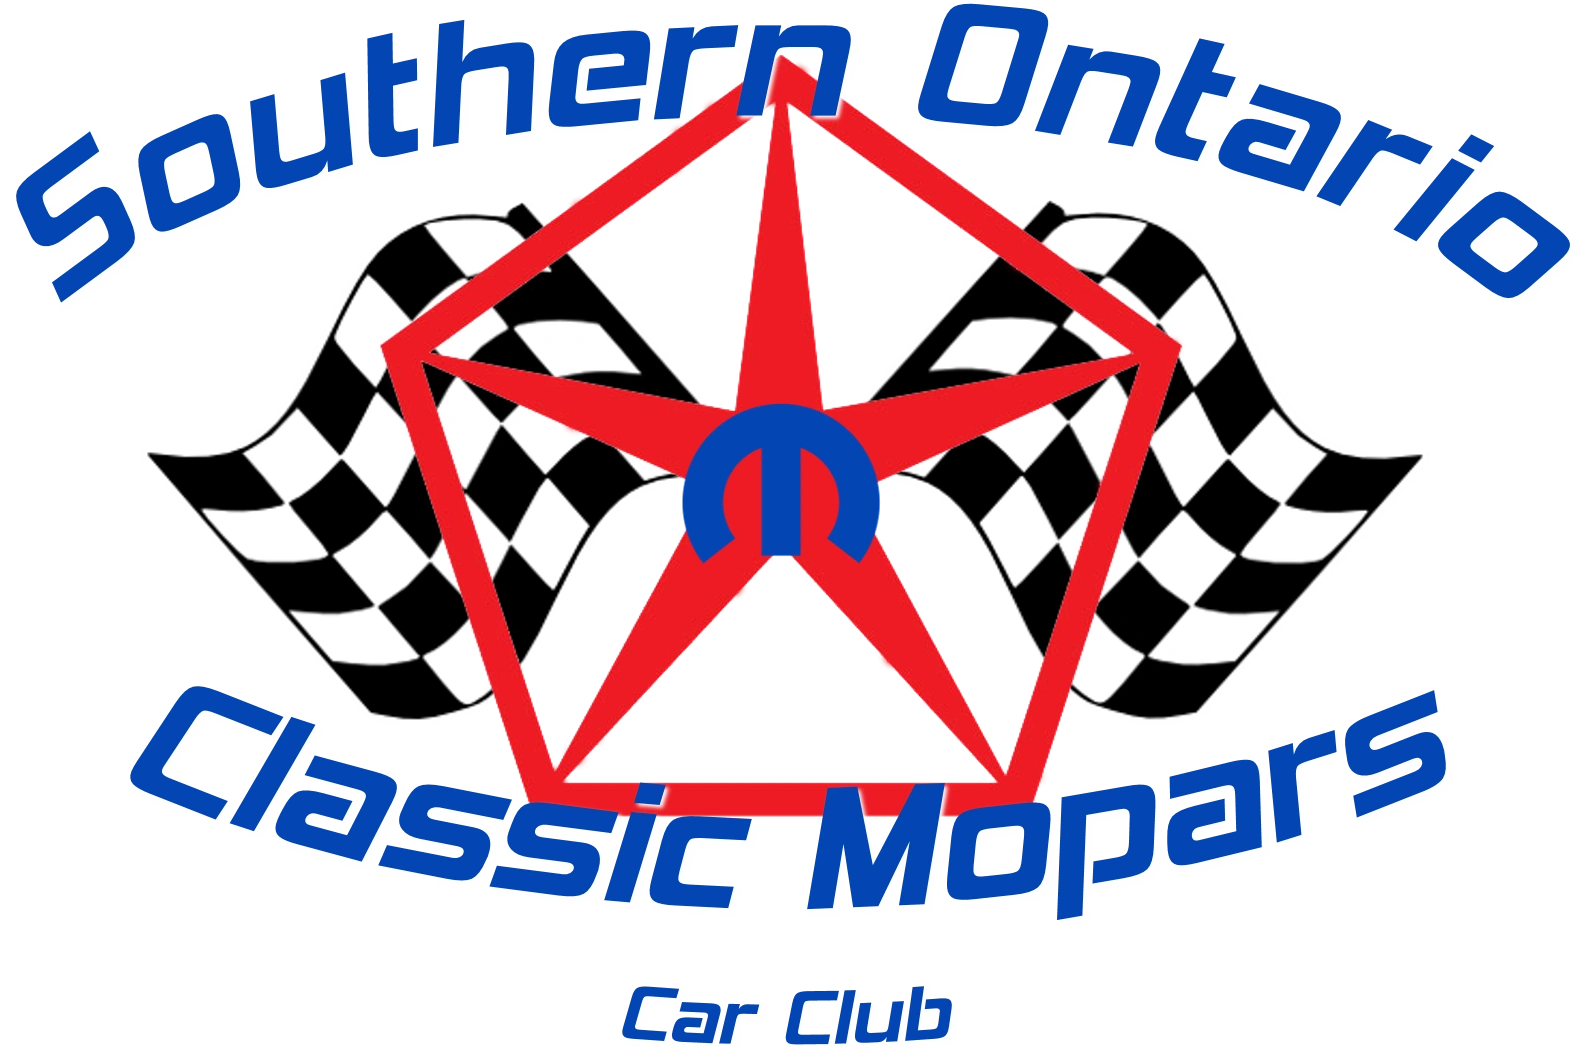 Socmopars Logo
Southern Ontario Classic Mopars Club